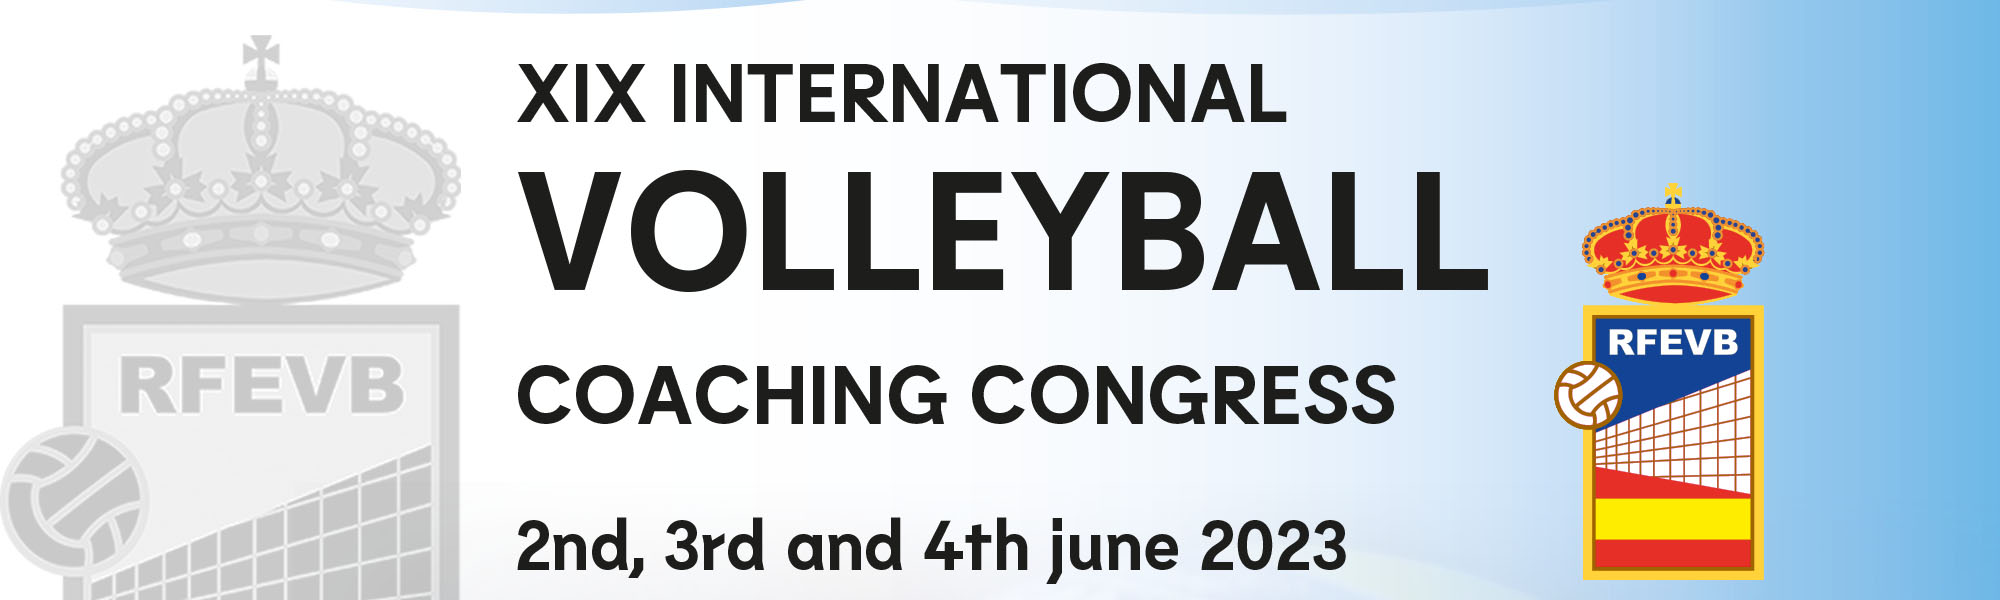 banner_international_volleyball_coaching_congress_rfevb